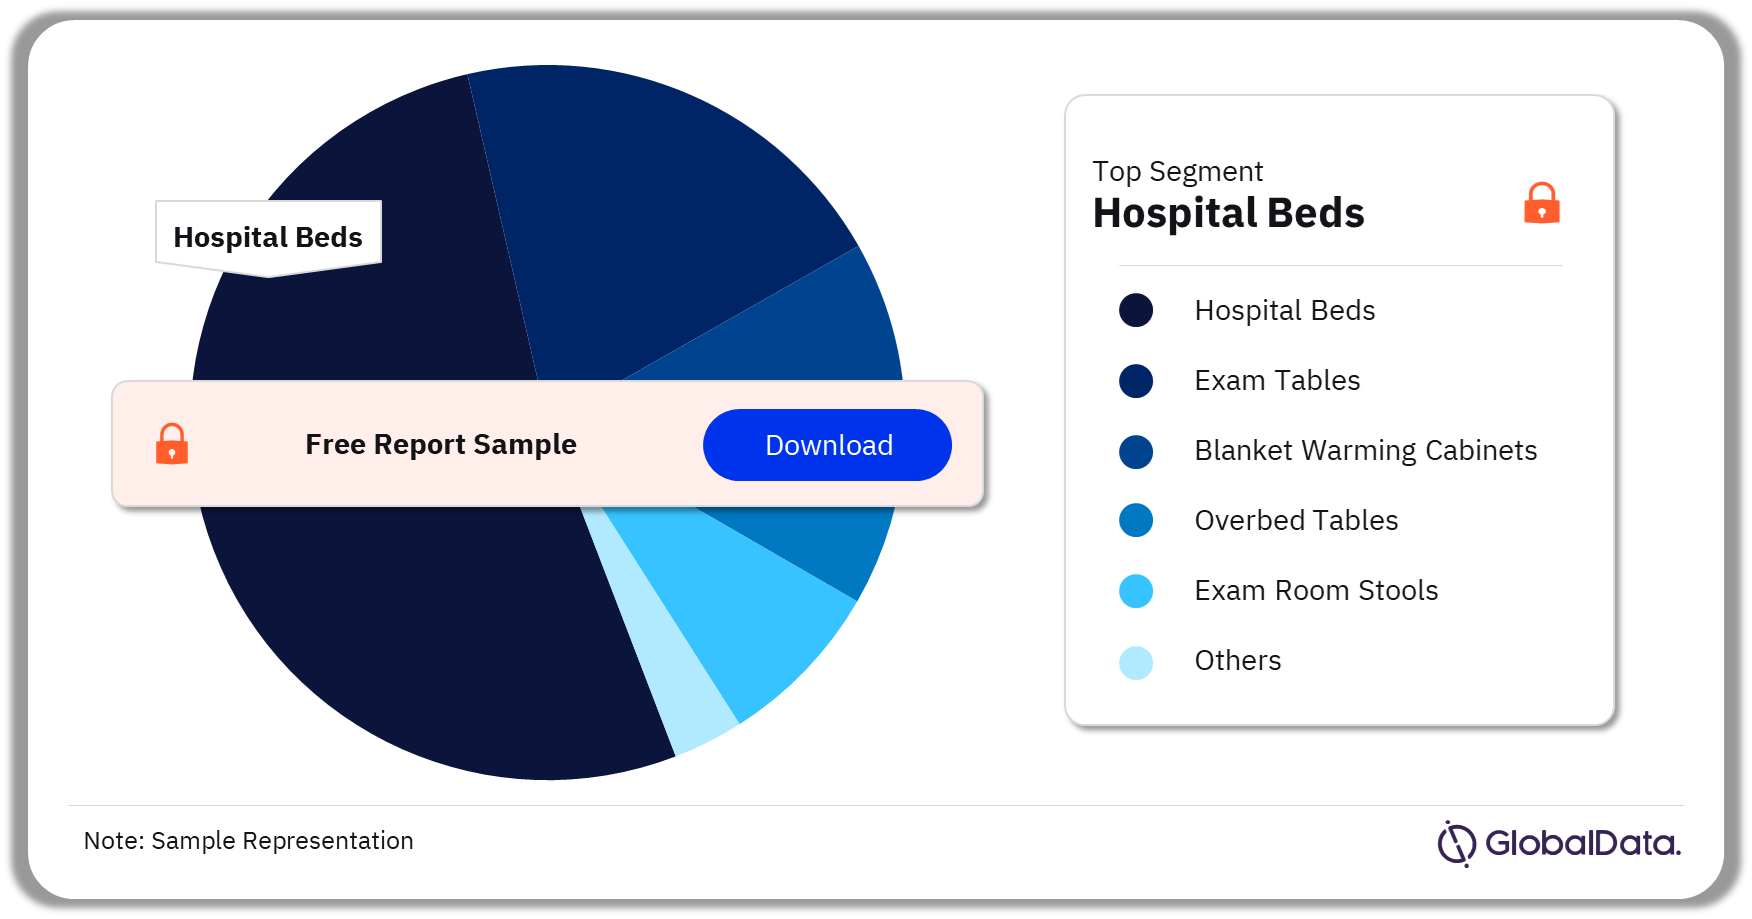 General Hospital Supplies Market Analysis by Segments, 2023 (%)